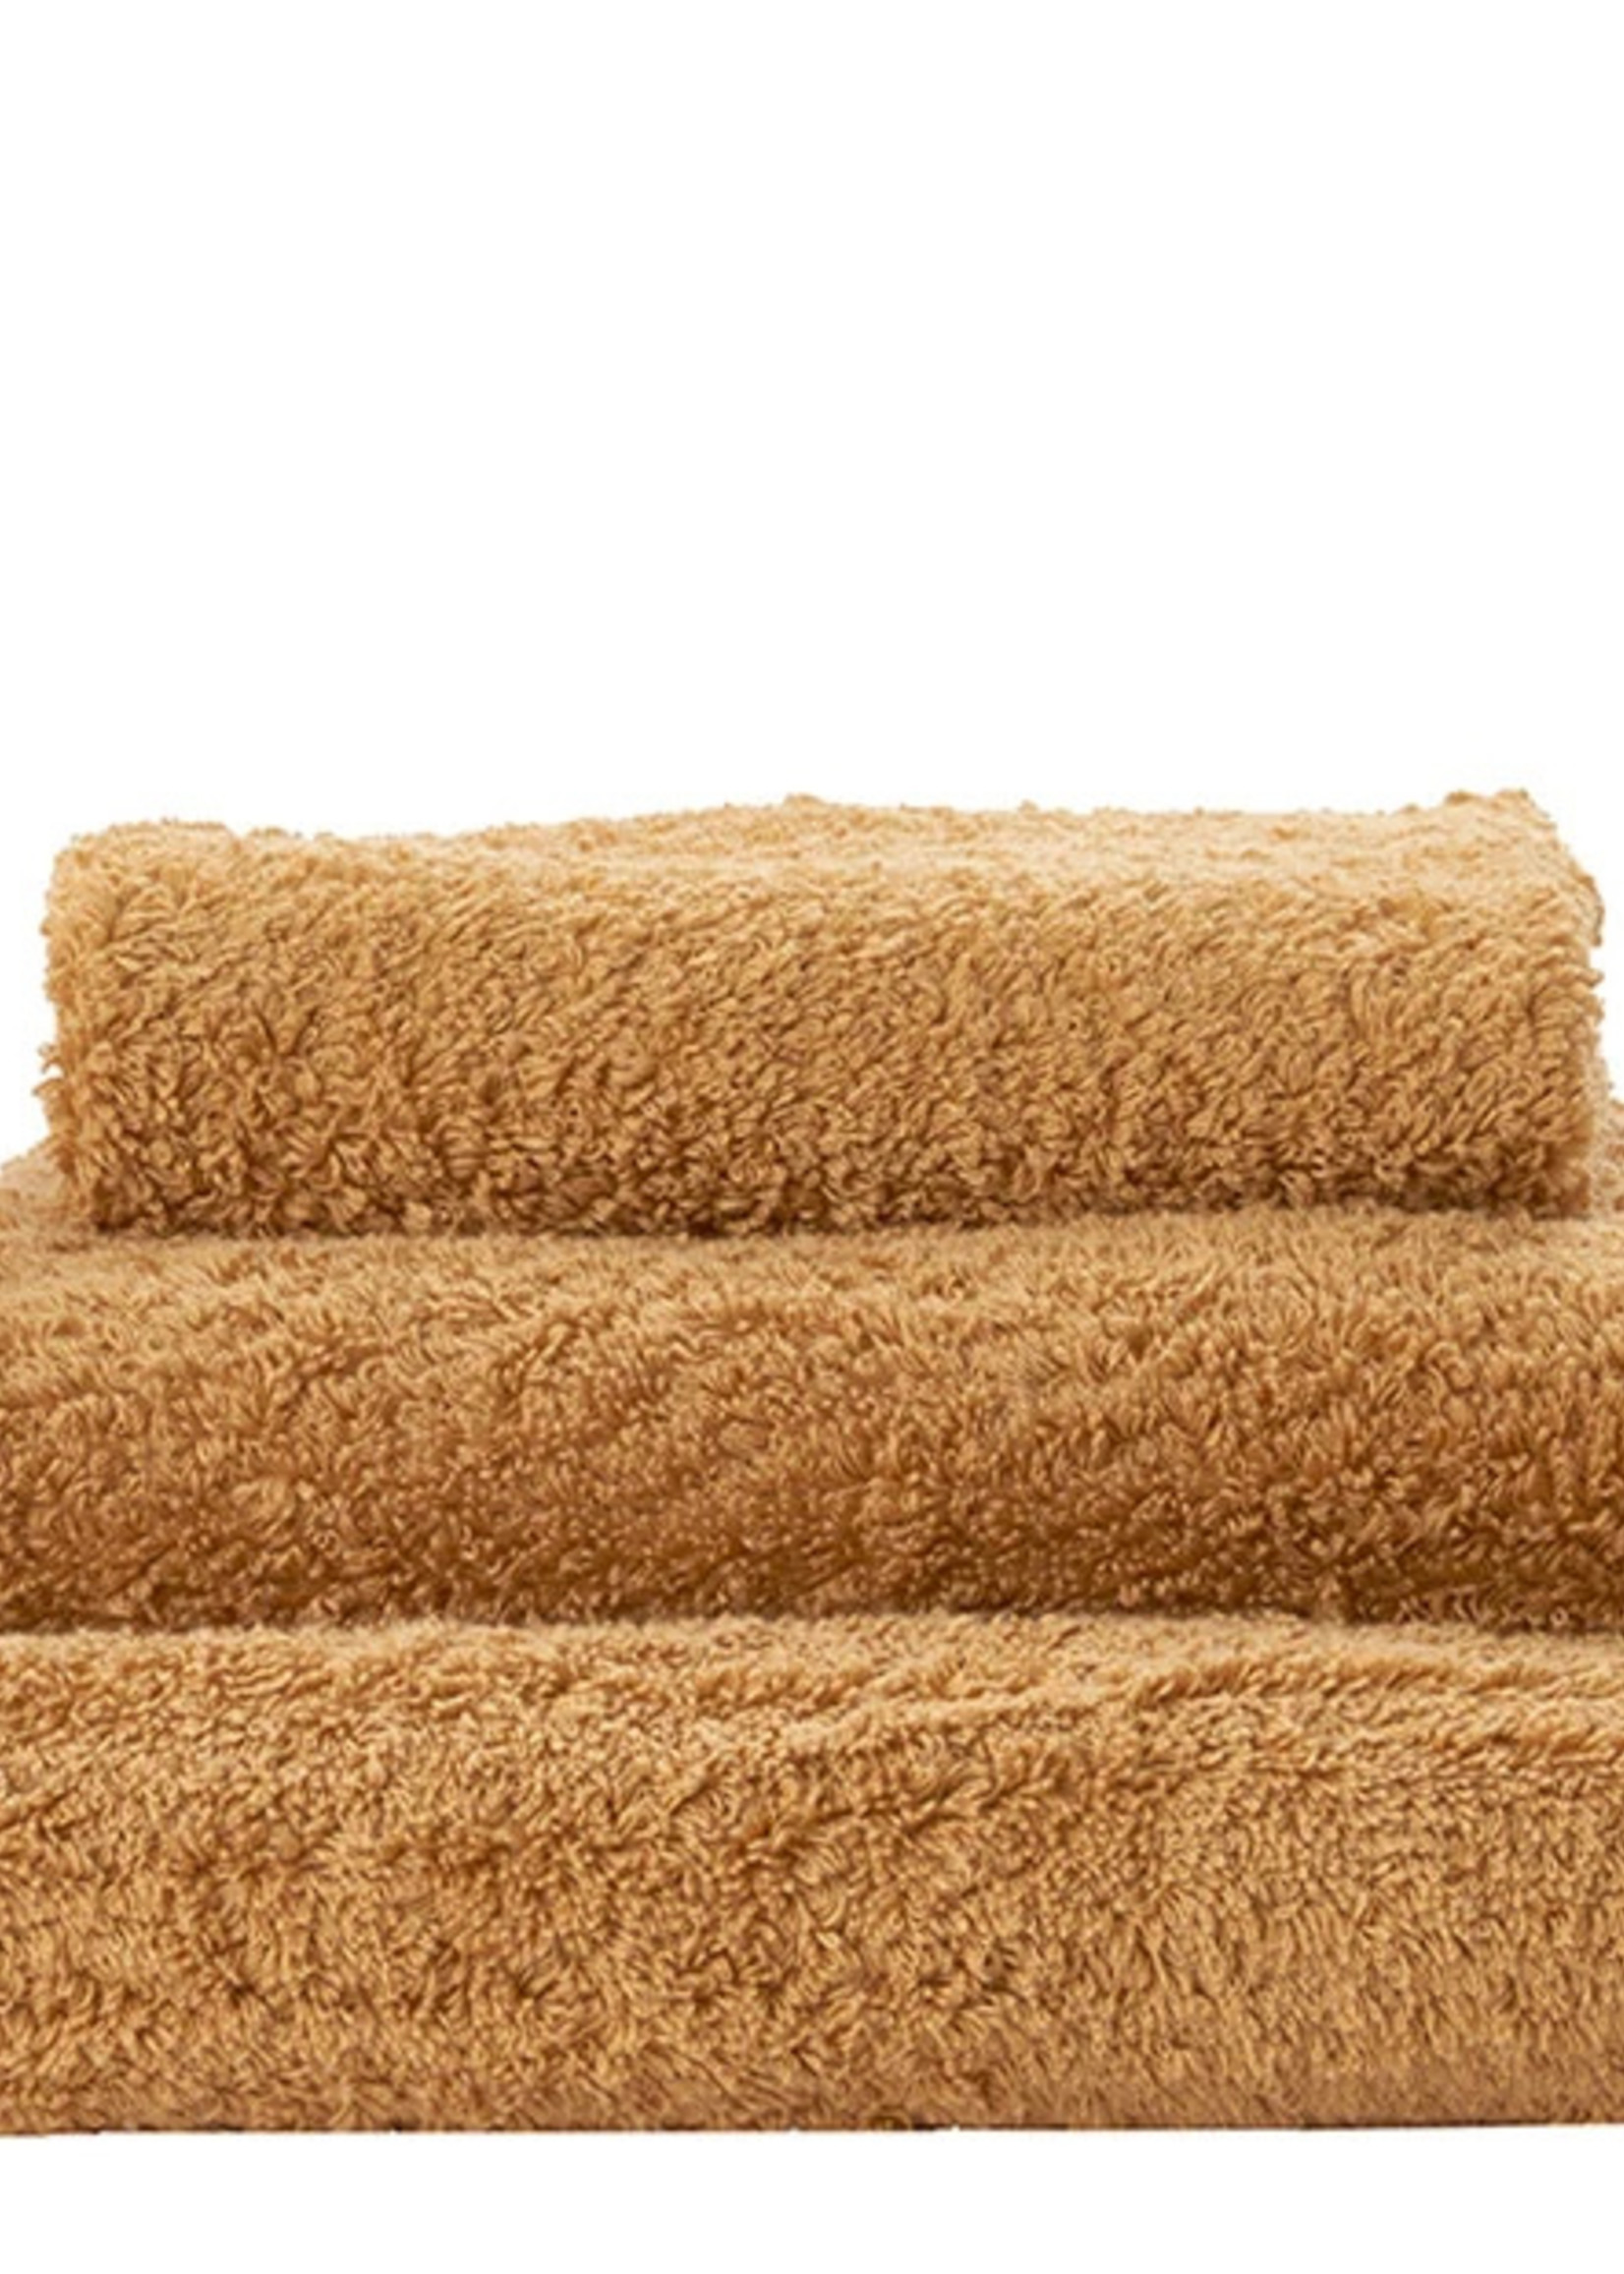 Towels GOLD brown colour